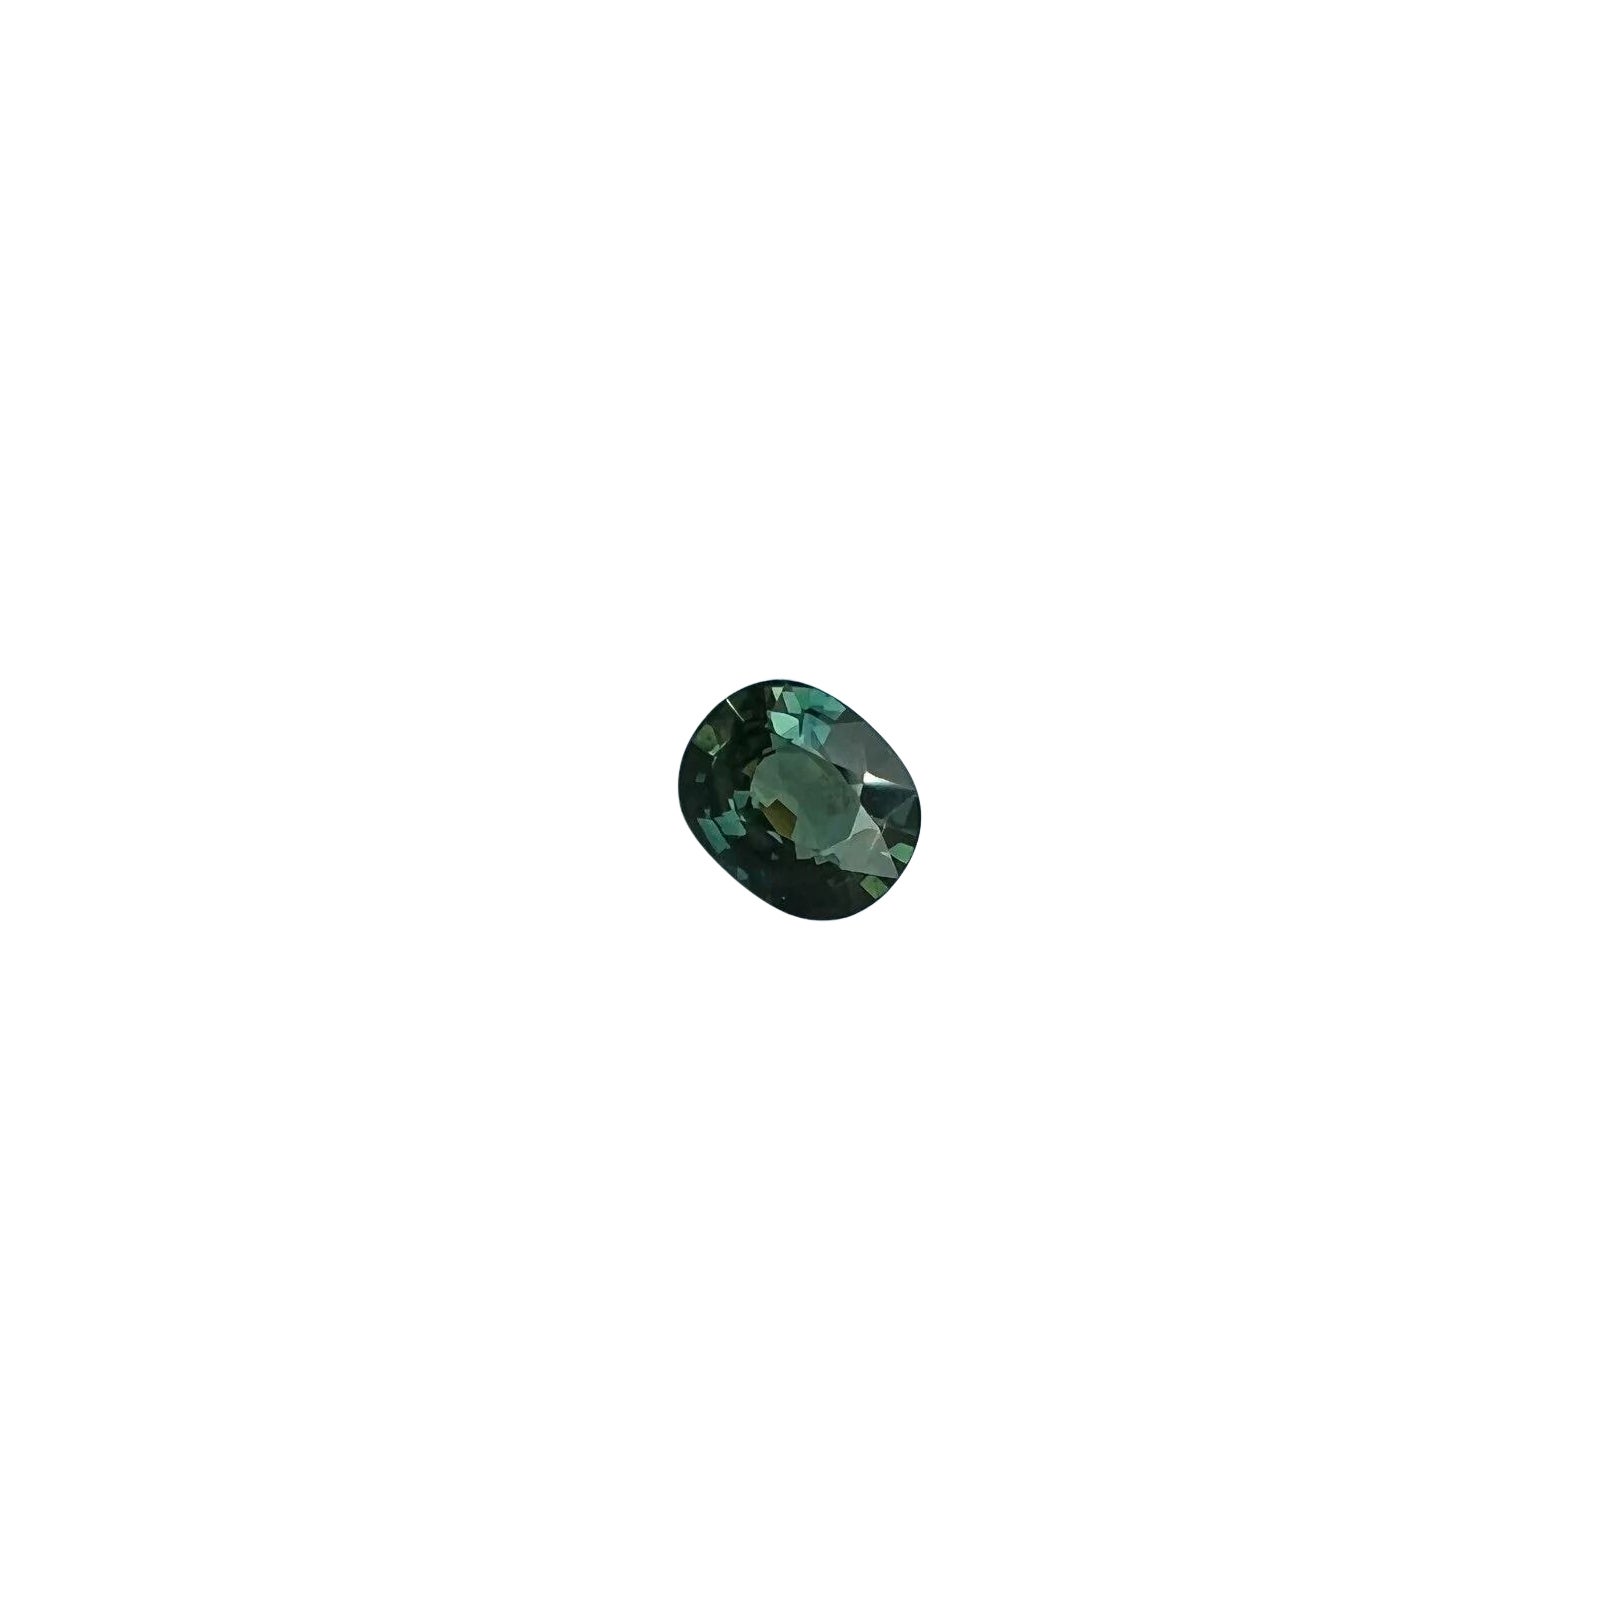 1.15ct Fine Deep Green Blue Teal Untreated Sapphire Oval Cut IGI Certified Gem